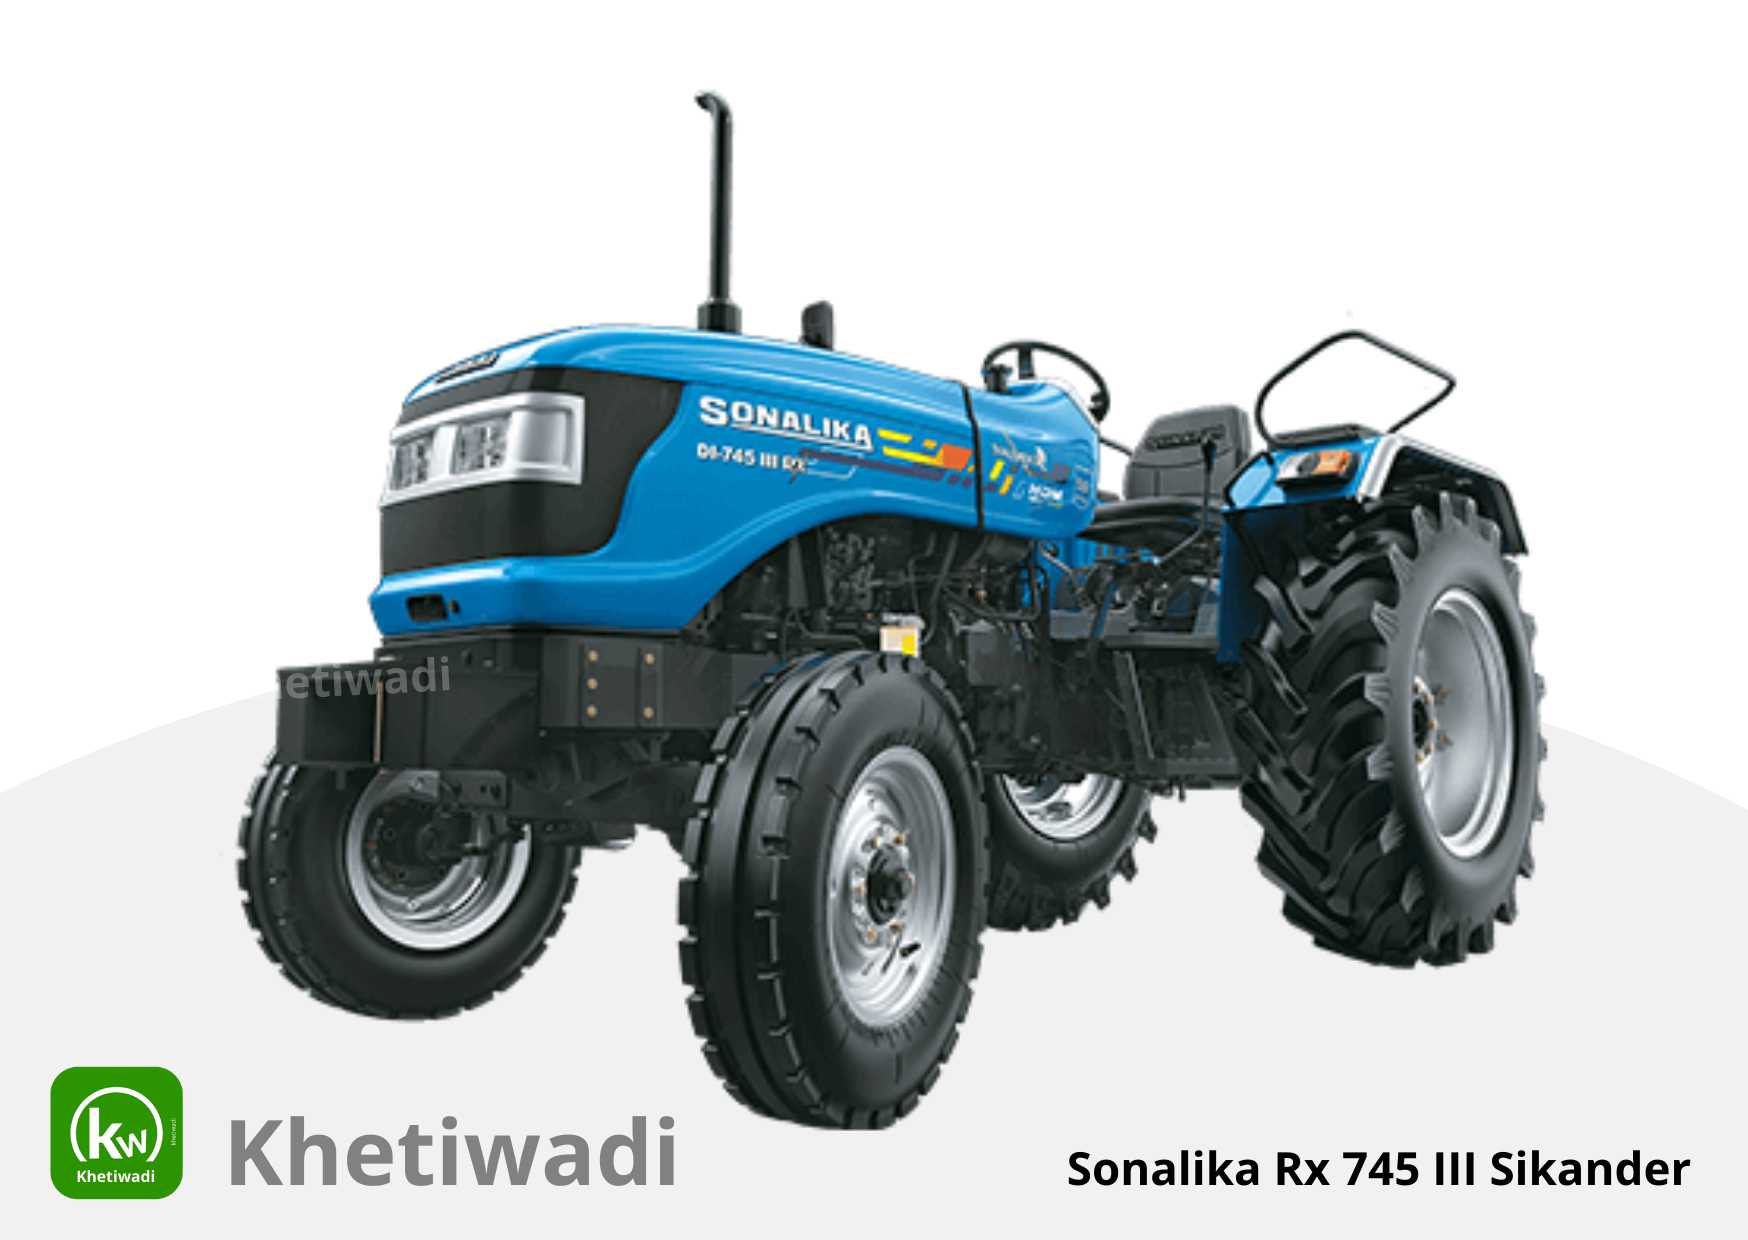 Sonalika Rx 745 III Sikander image